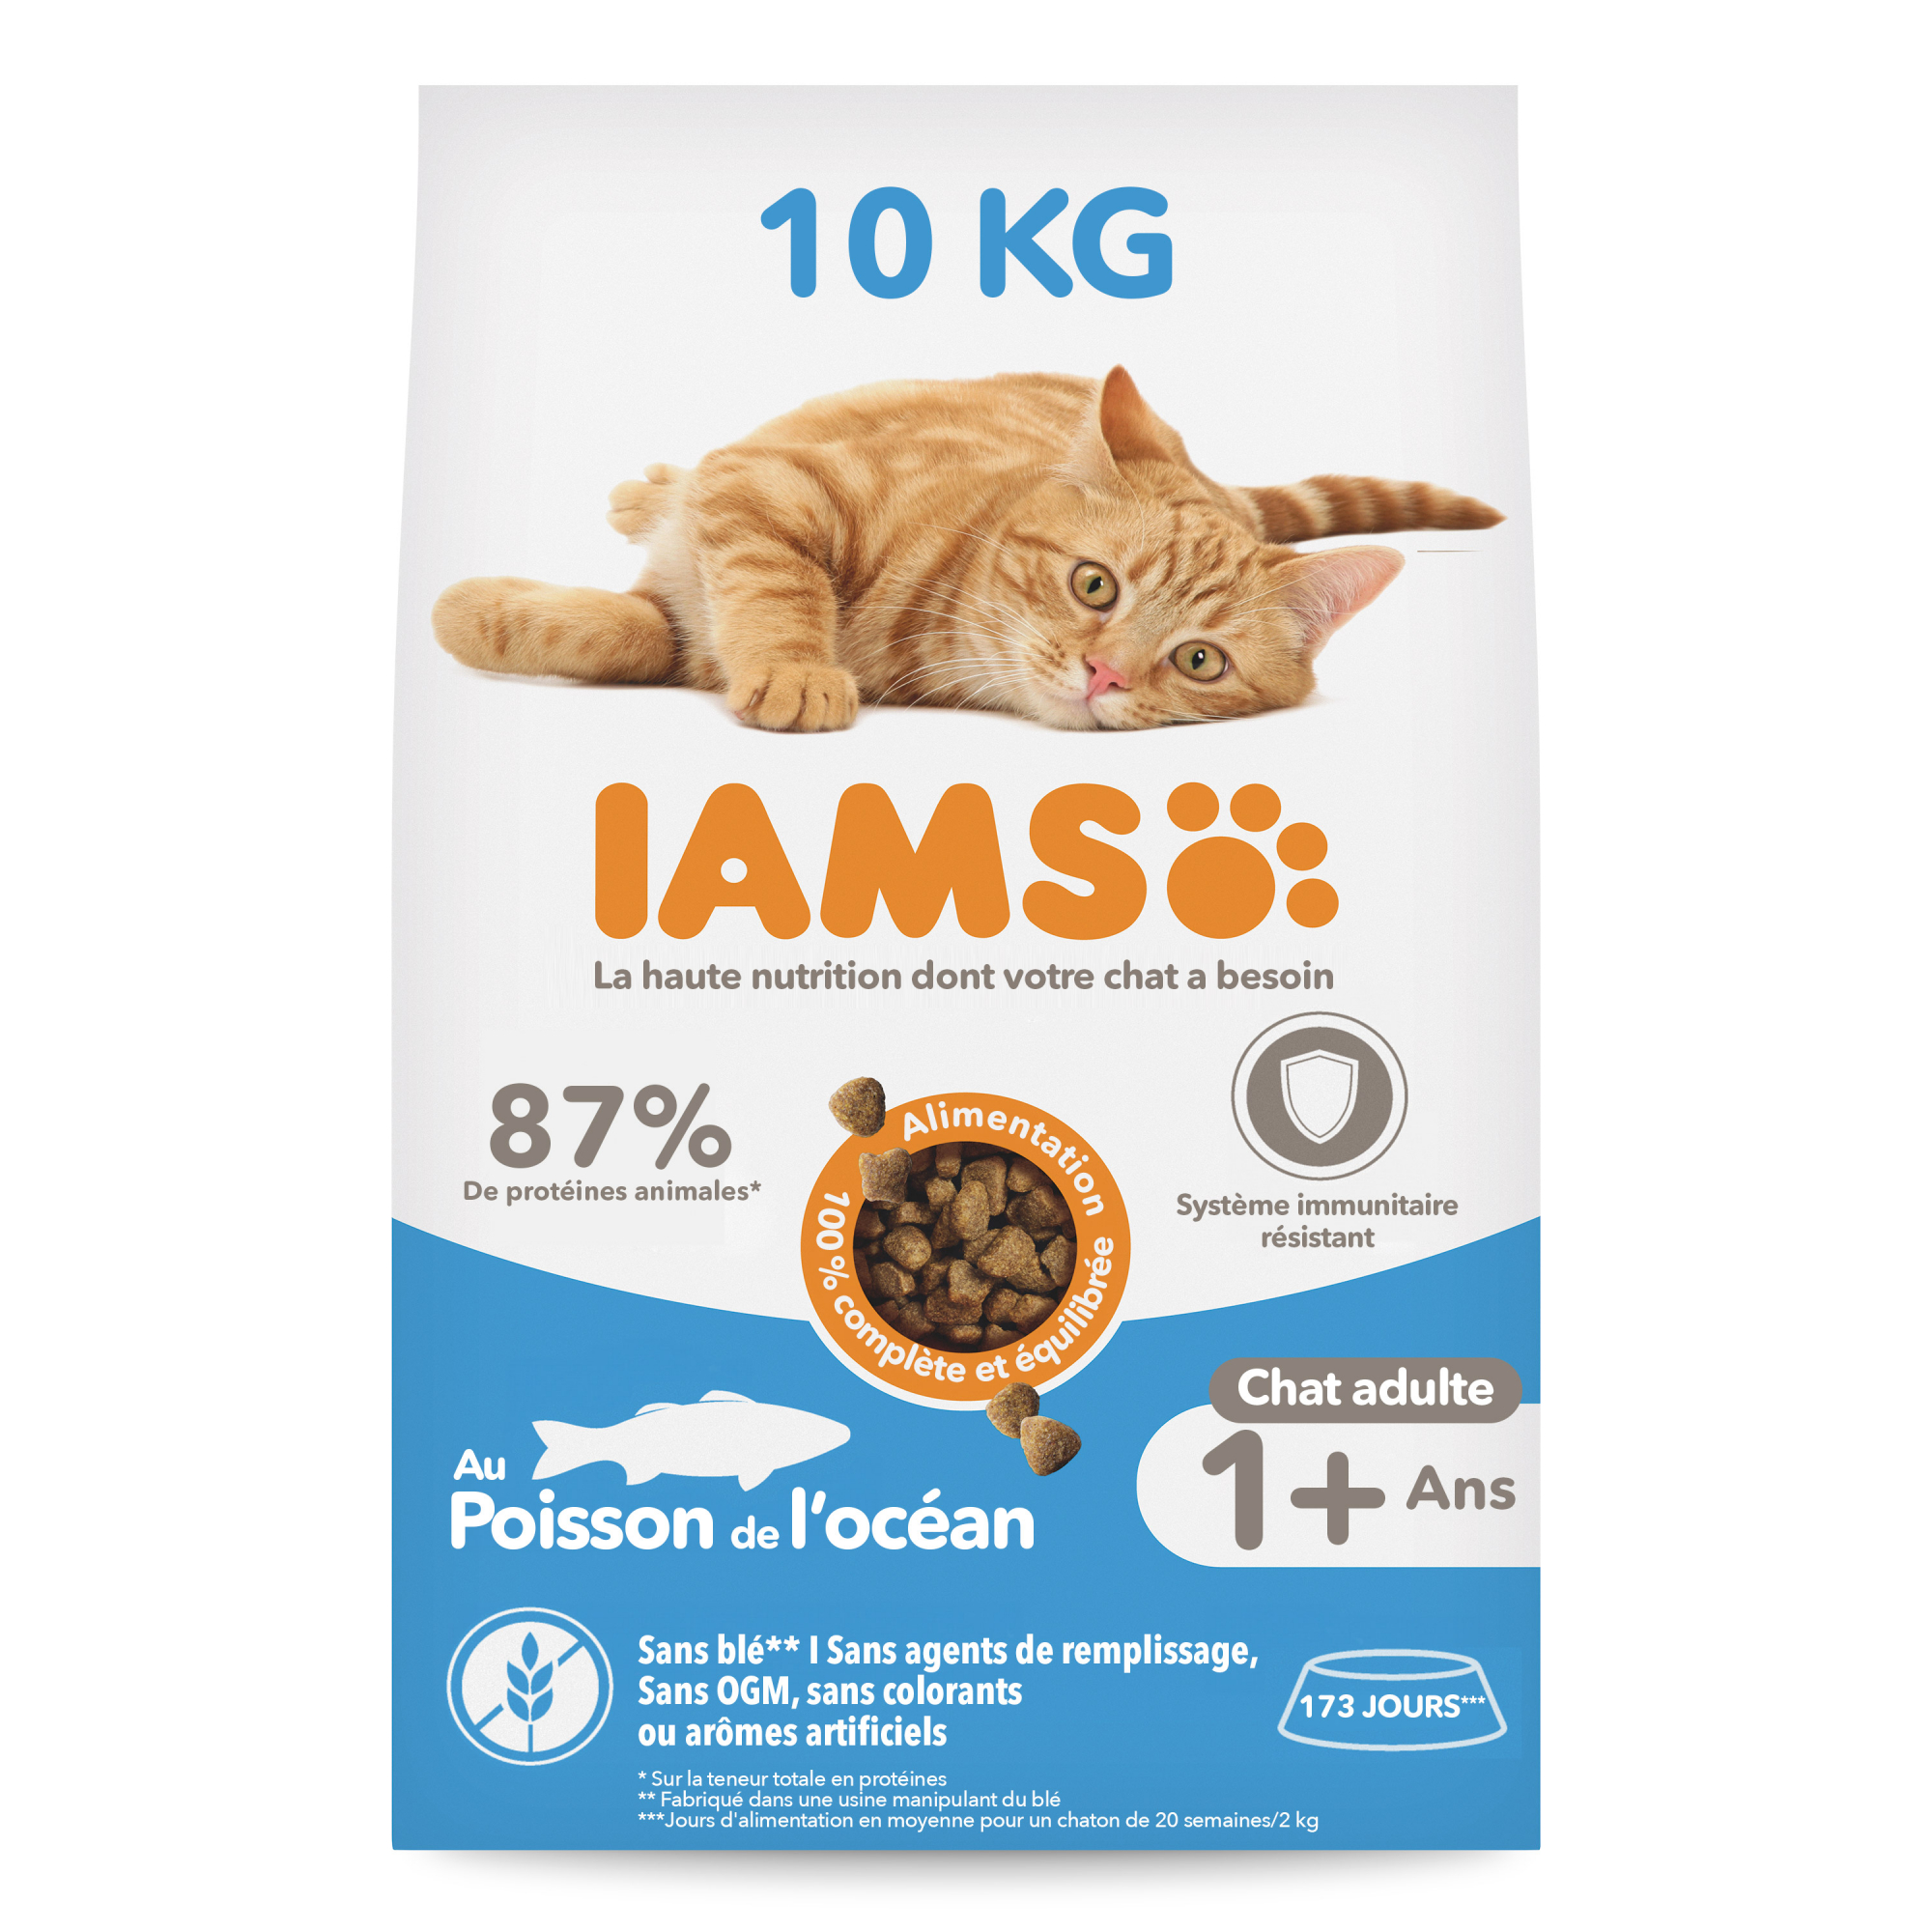 IAMS Advanced Nutrition Pescado azul pienso para gatos